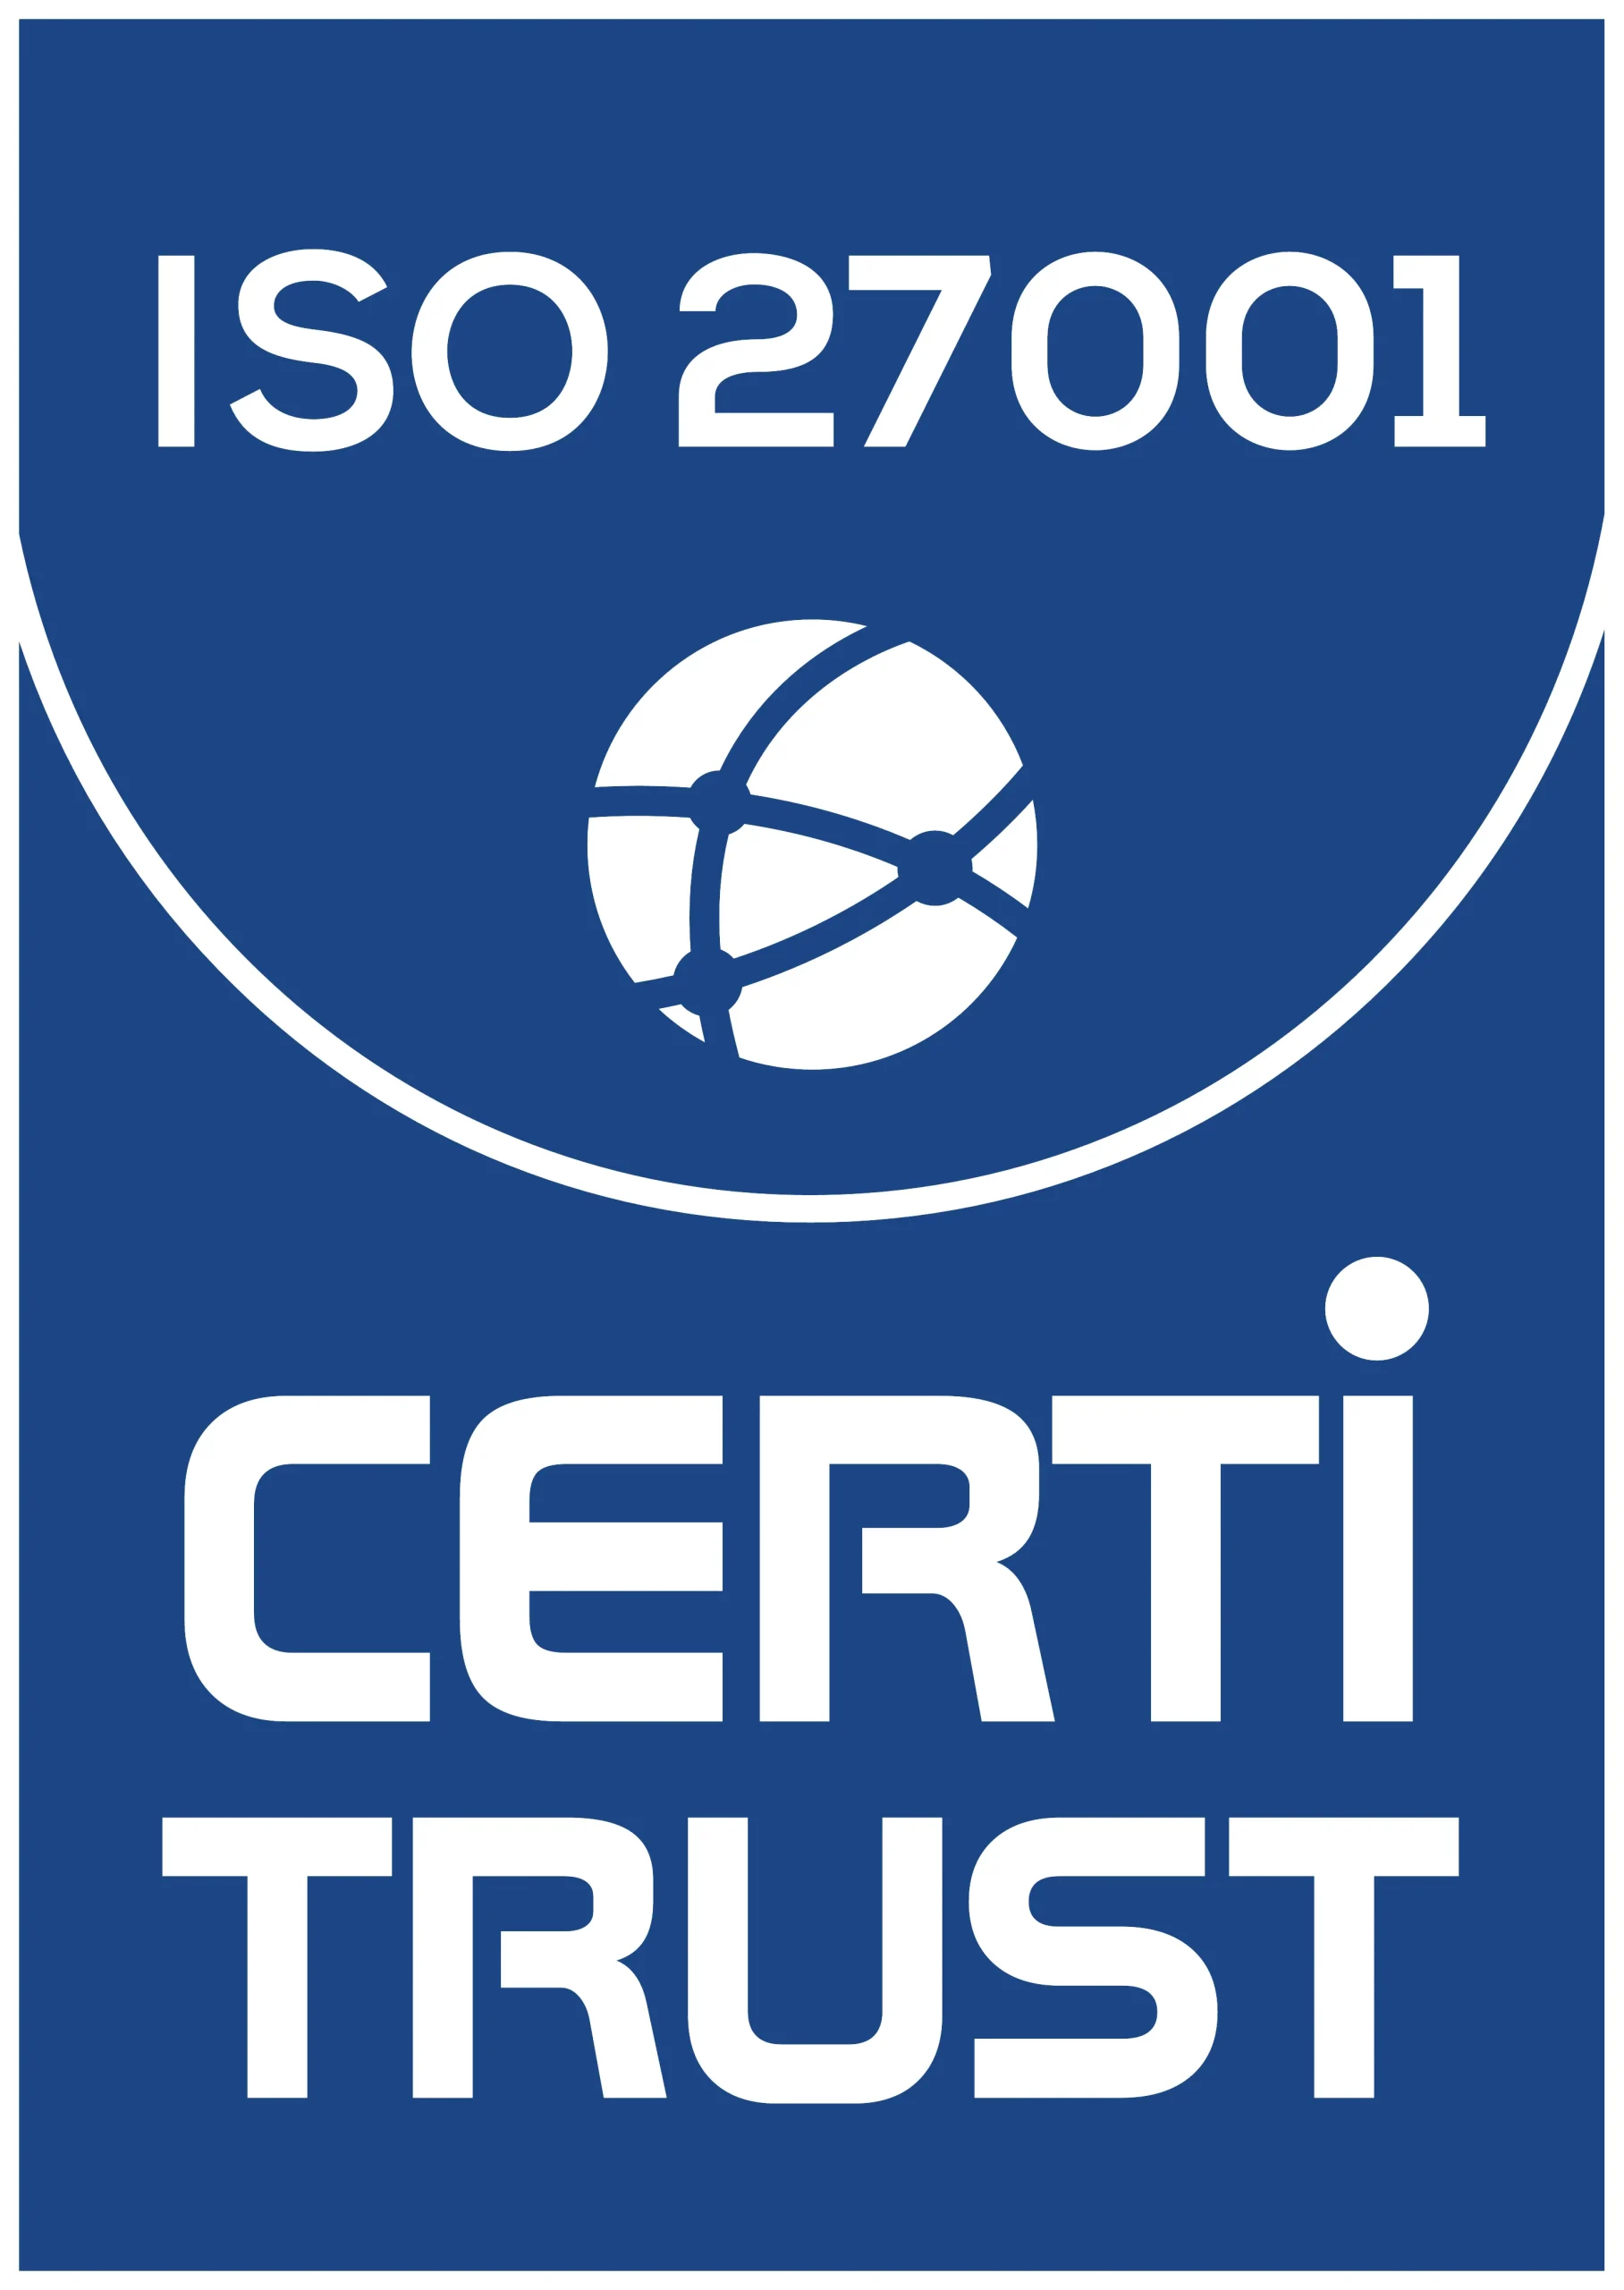 HD_Certification Logo_ISO-27001_CertiTrust